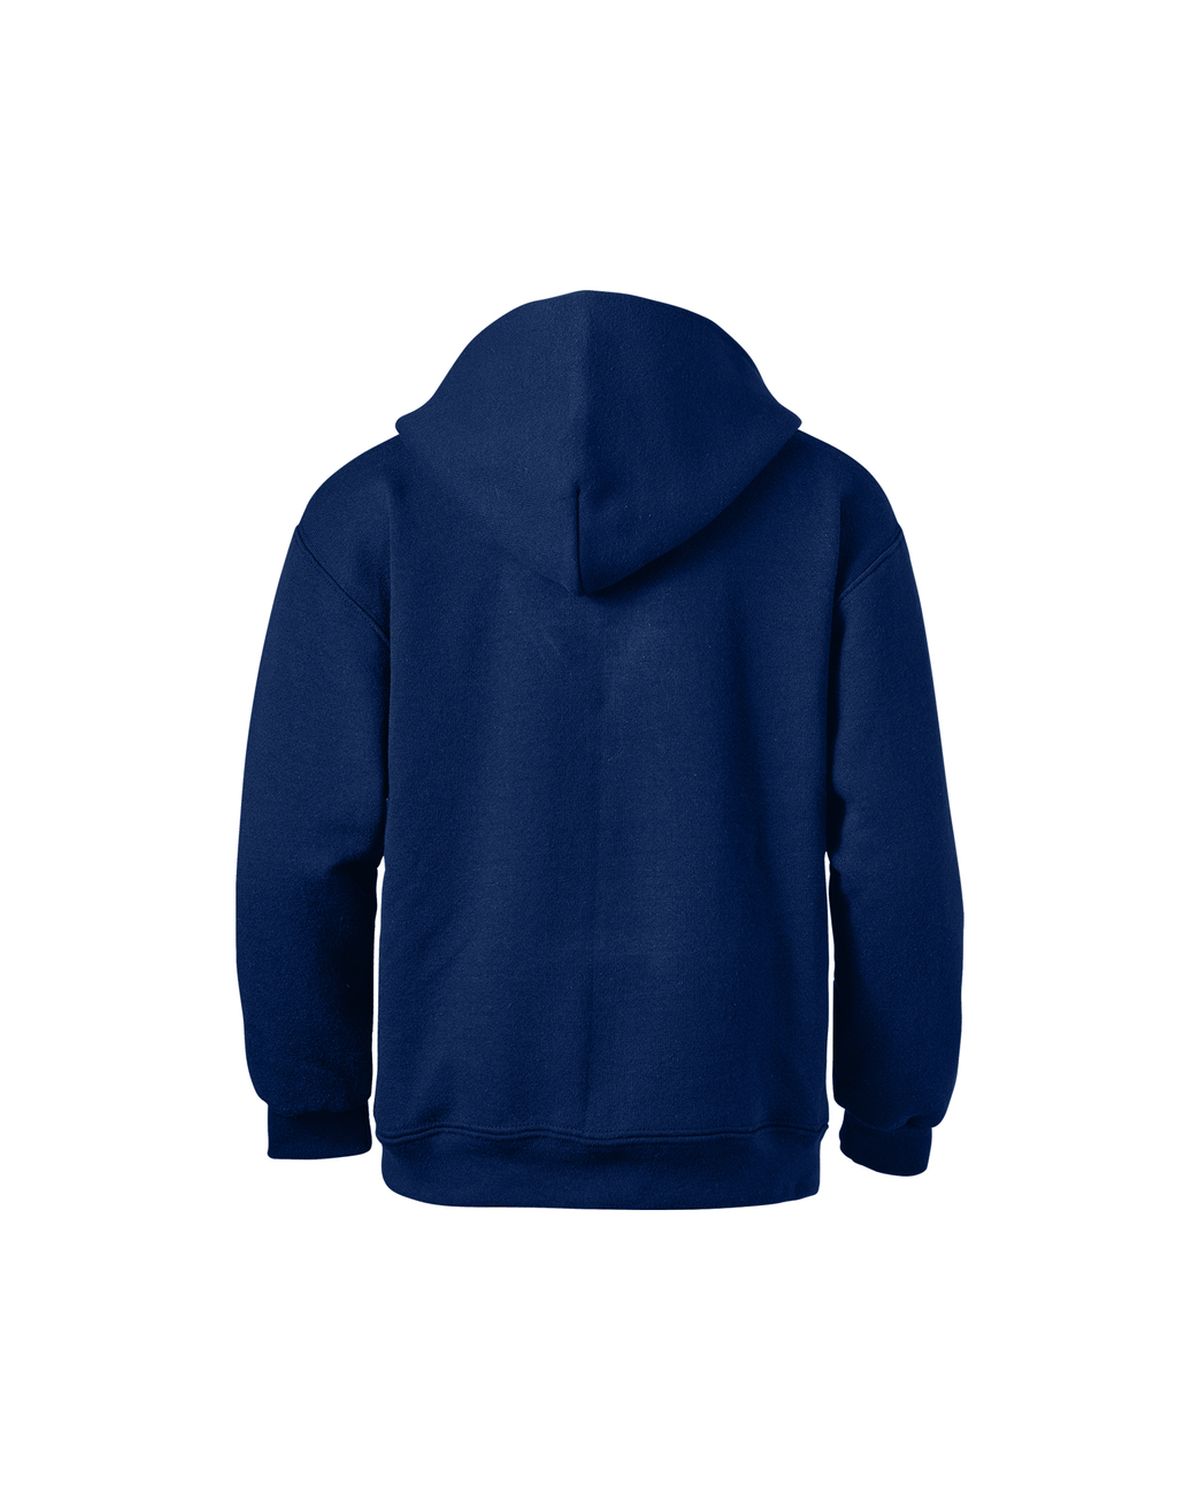 'Soffe B9078 Youth Classic Zip Hooded Sweatshirt'